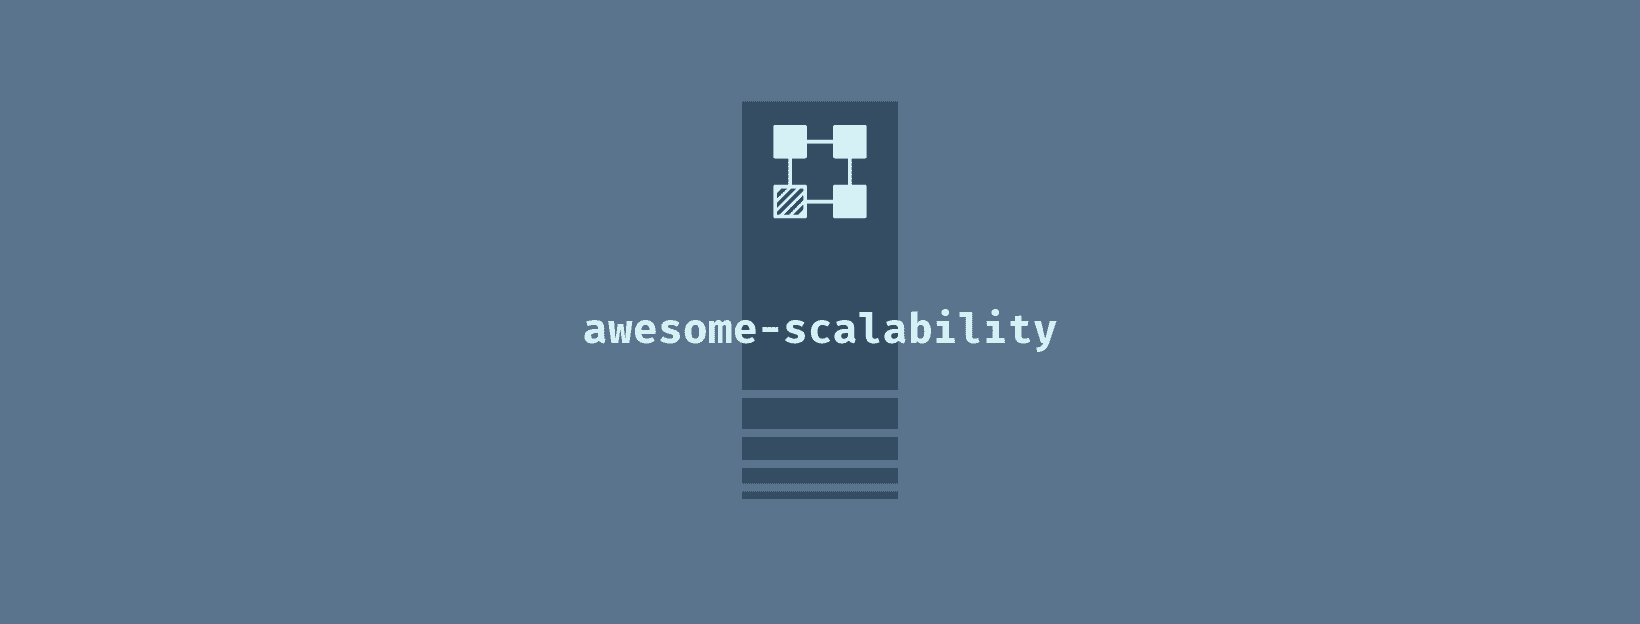 awesome-scalability